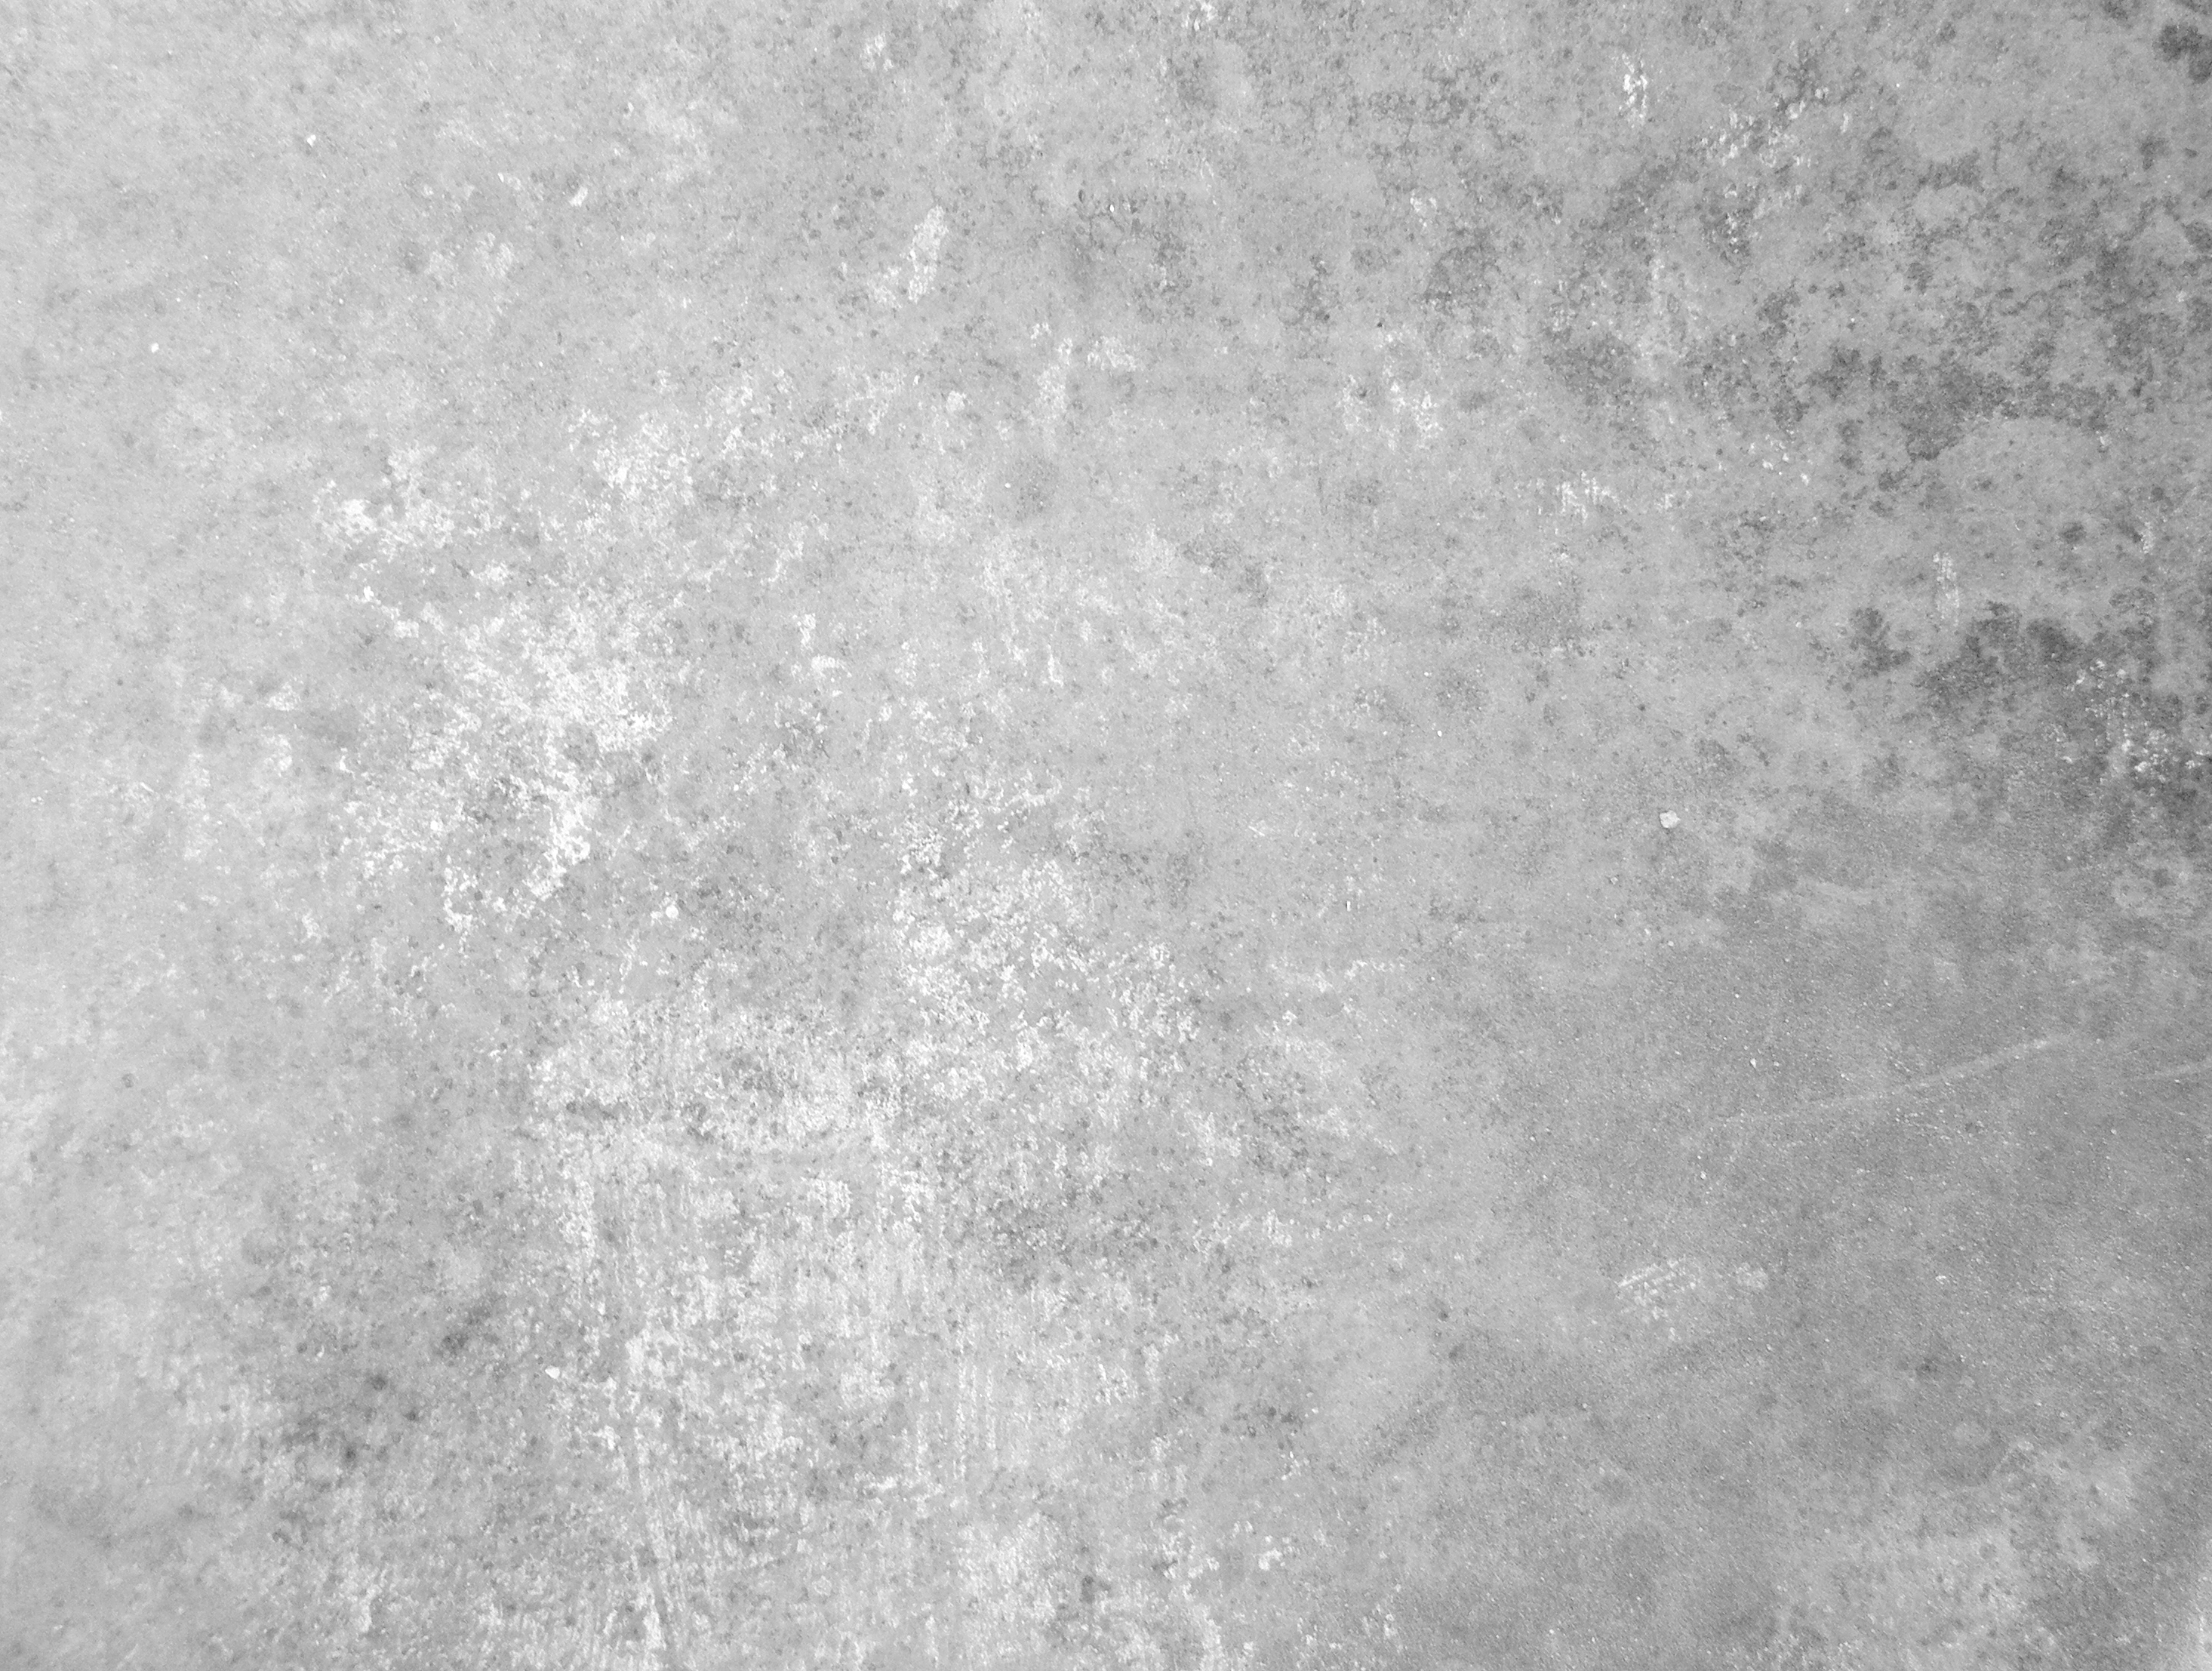 Free photo: Grey Grunge Texture - Backdrop, Light, Texture ...